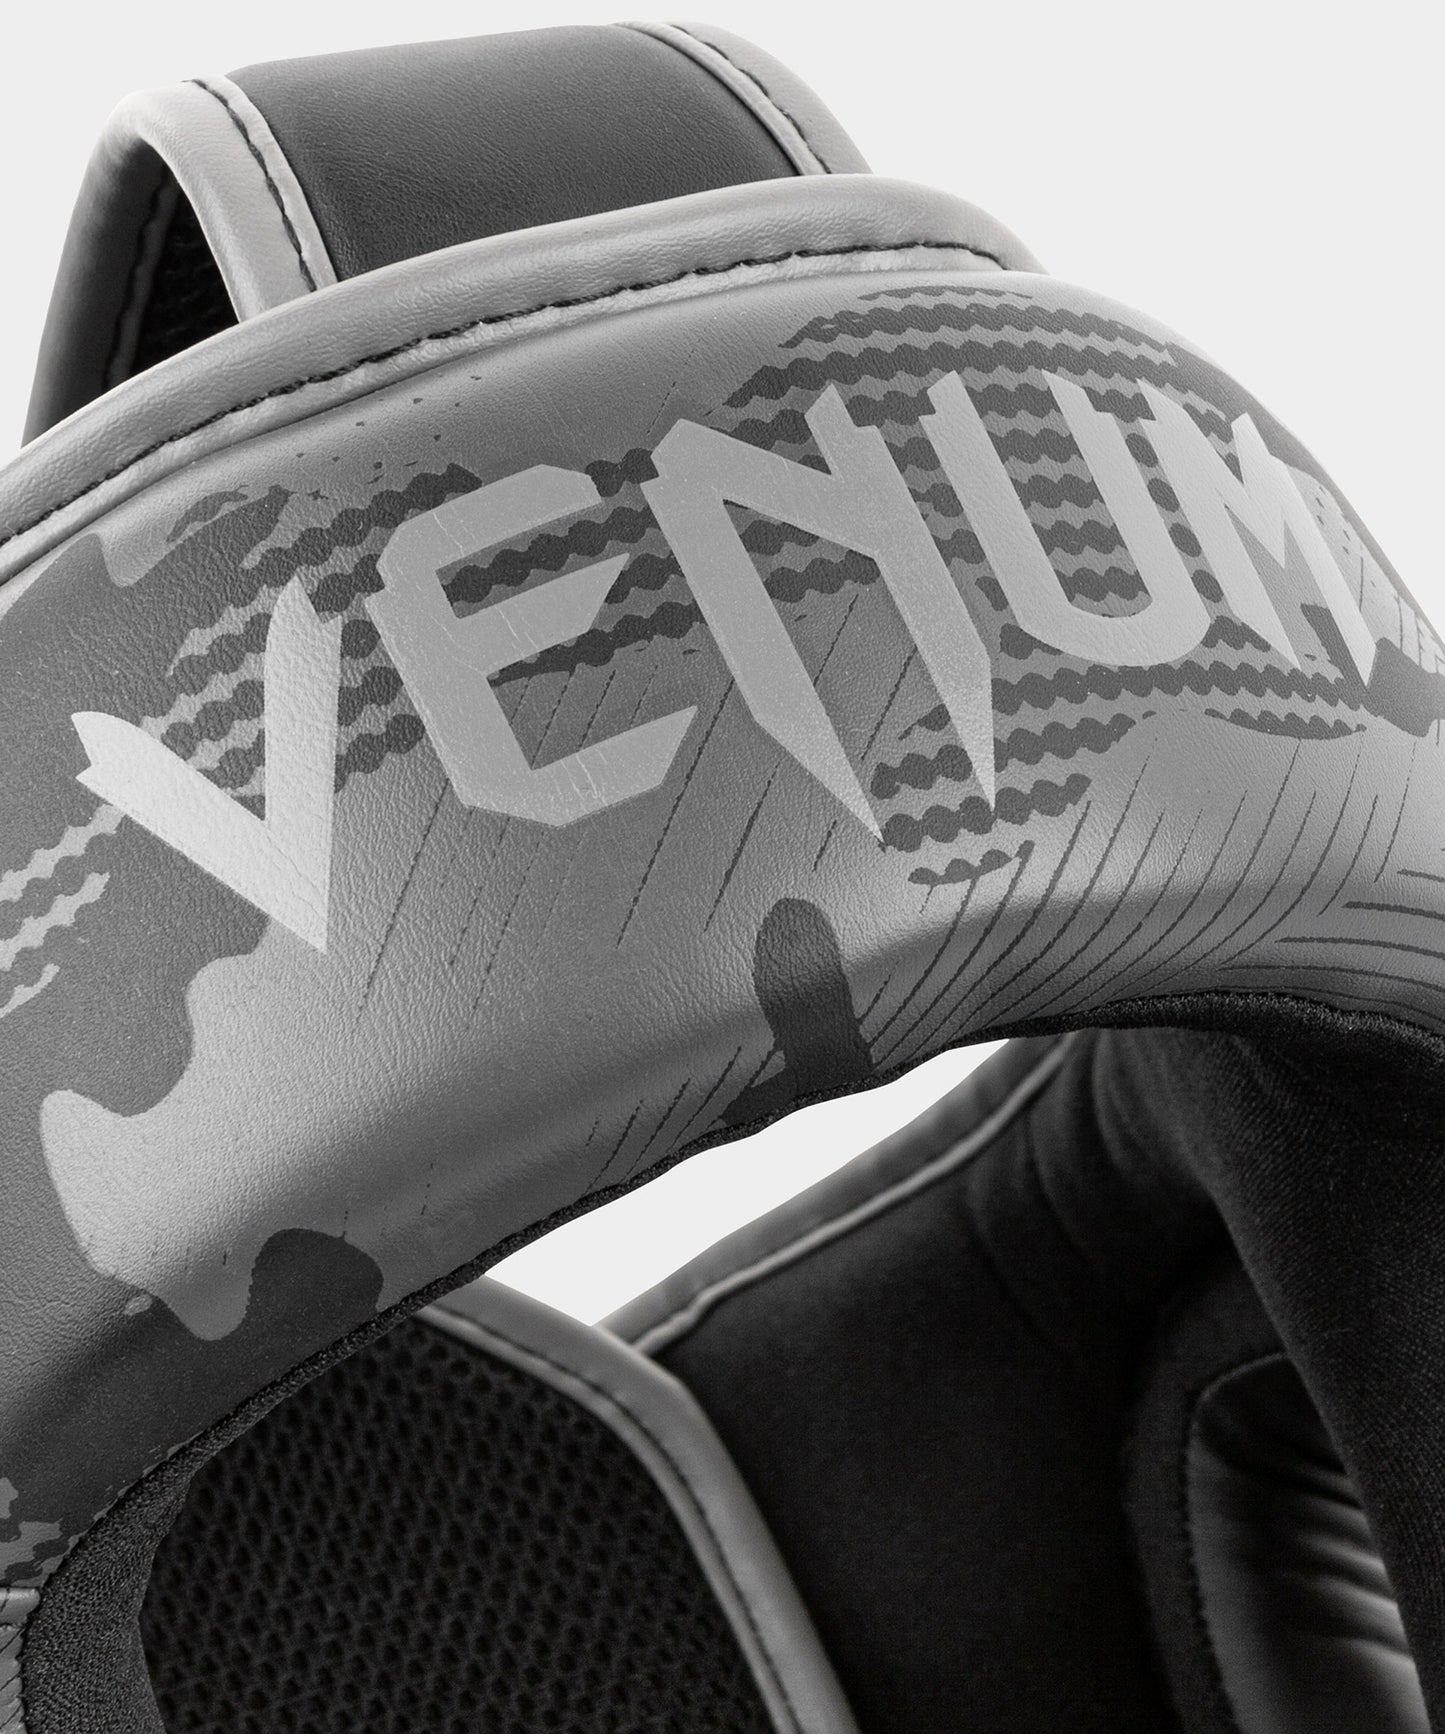 Venum Elite Boxing Headgear - Black/Dark camo